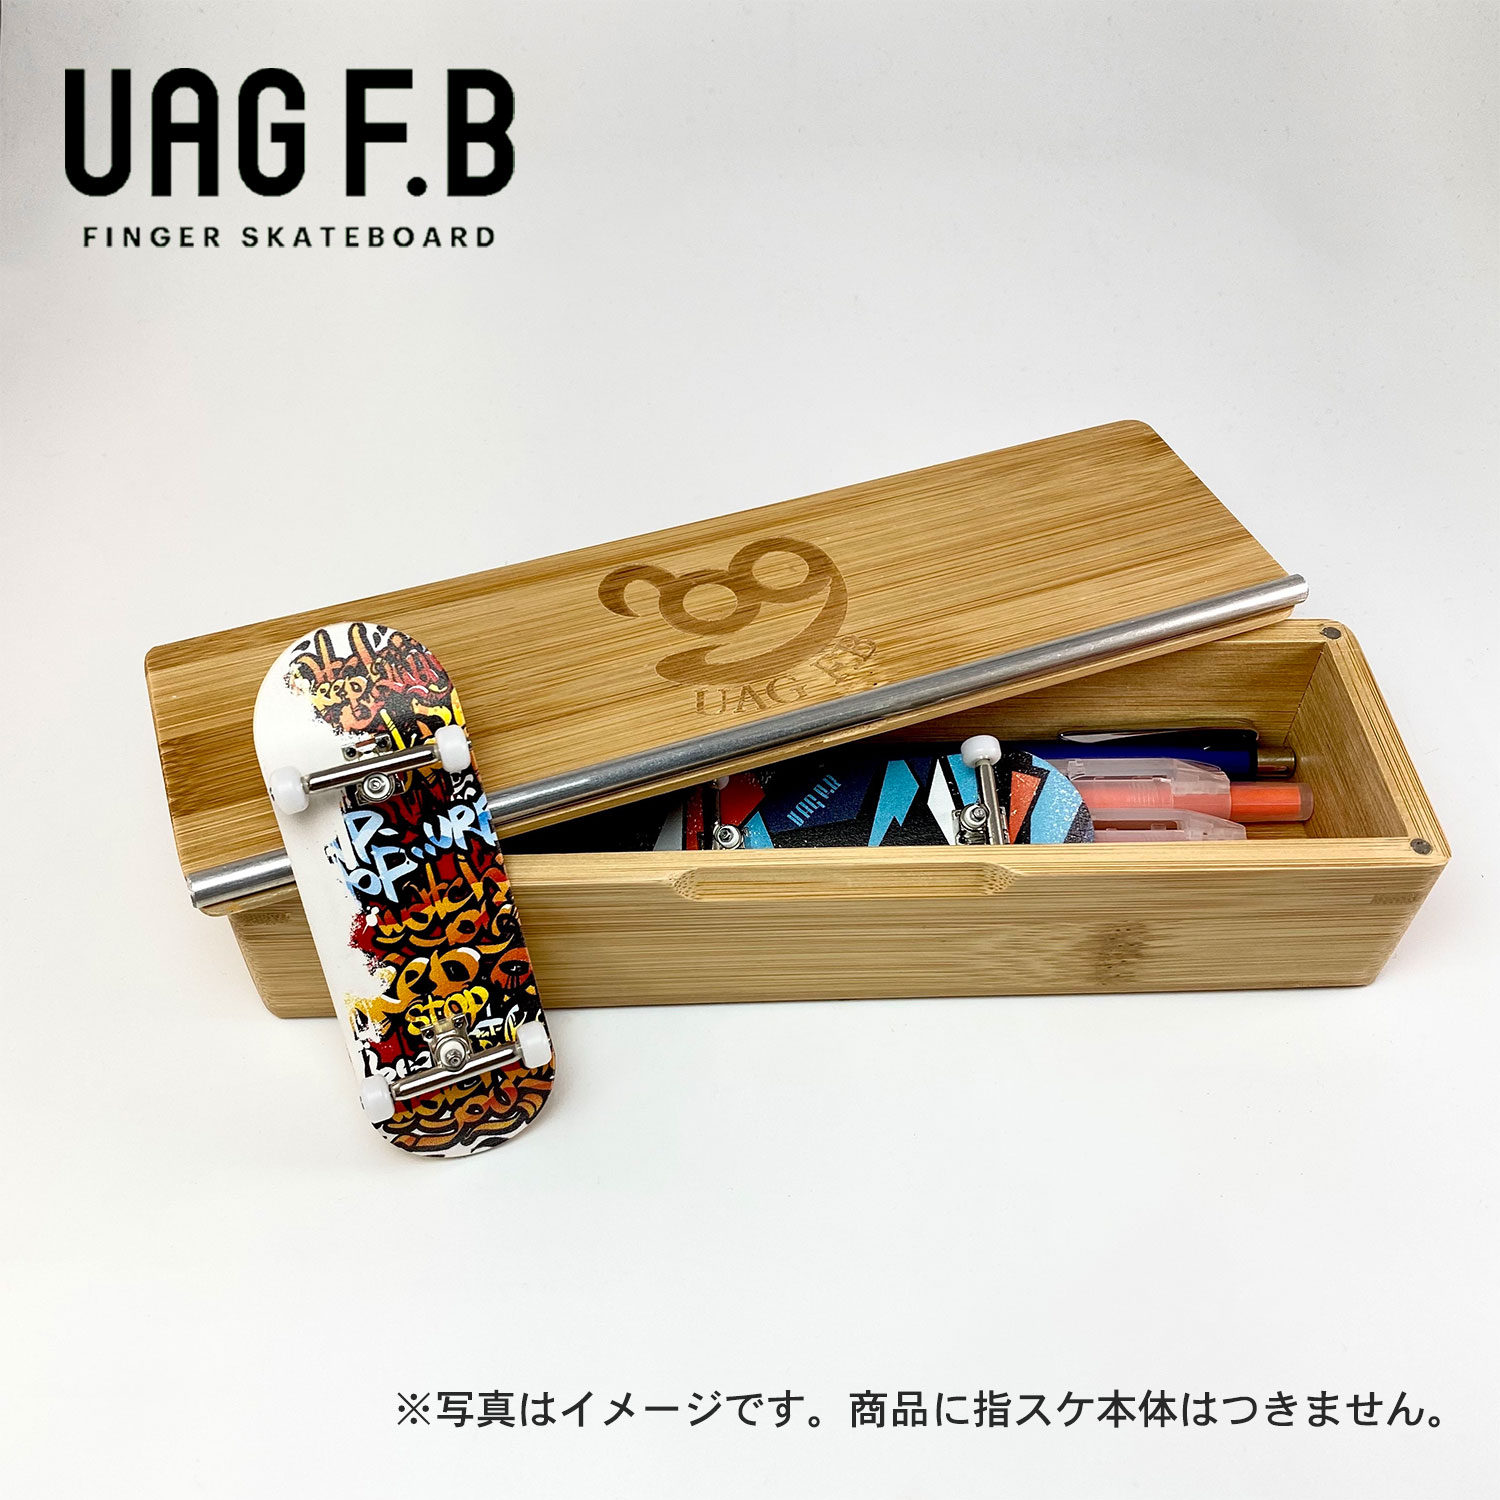 UAG F.B 【指スケ セクション】Bamboo box - Single coping / 指スケ / セクション/ ボックス / 指スケボー